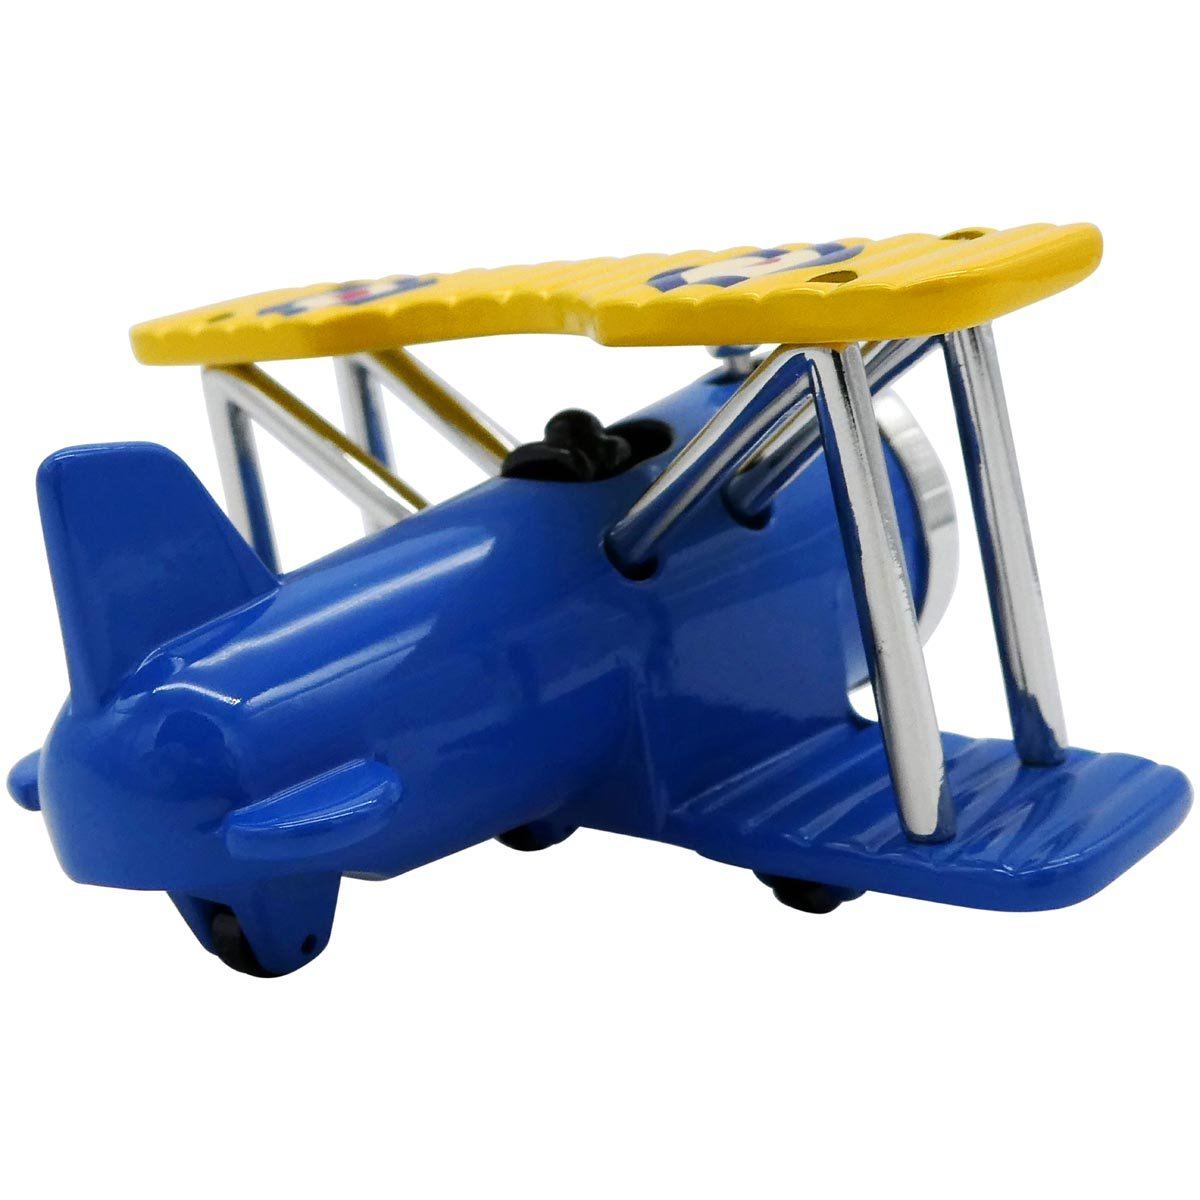 Pilot Toys Blue and Yellow Biplane Desk Clock - PilotMall.com